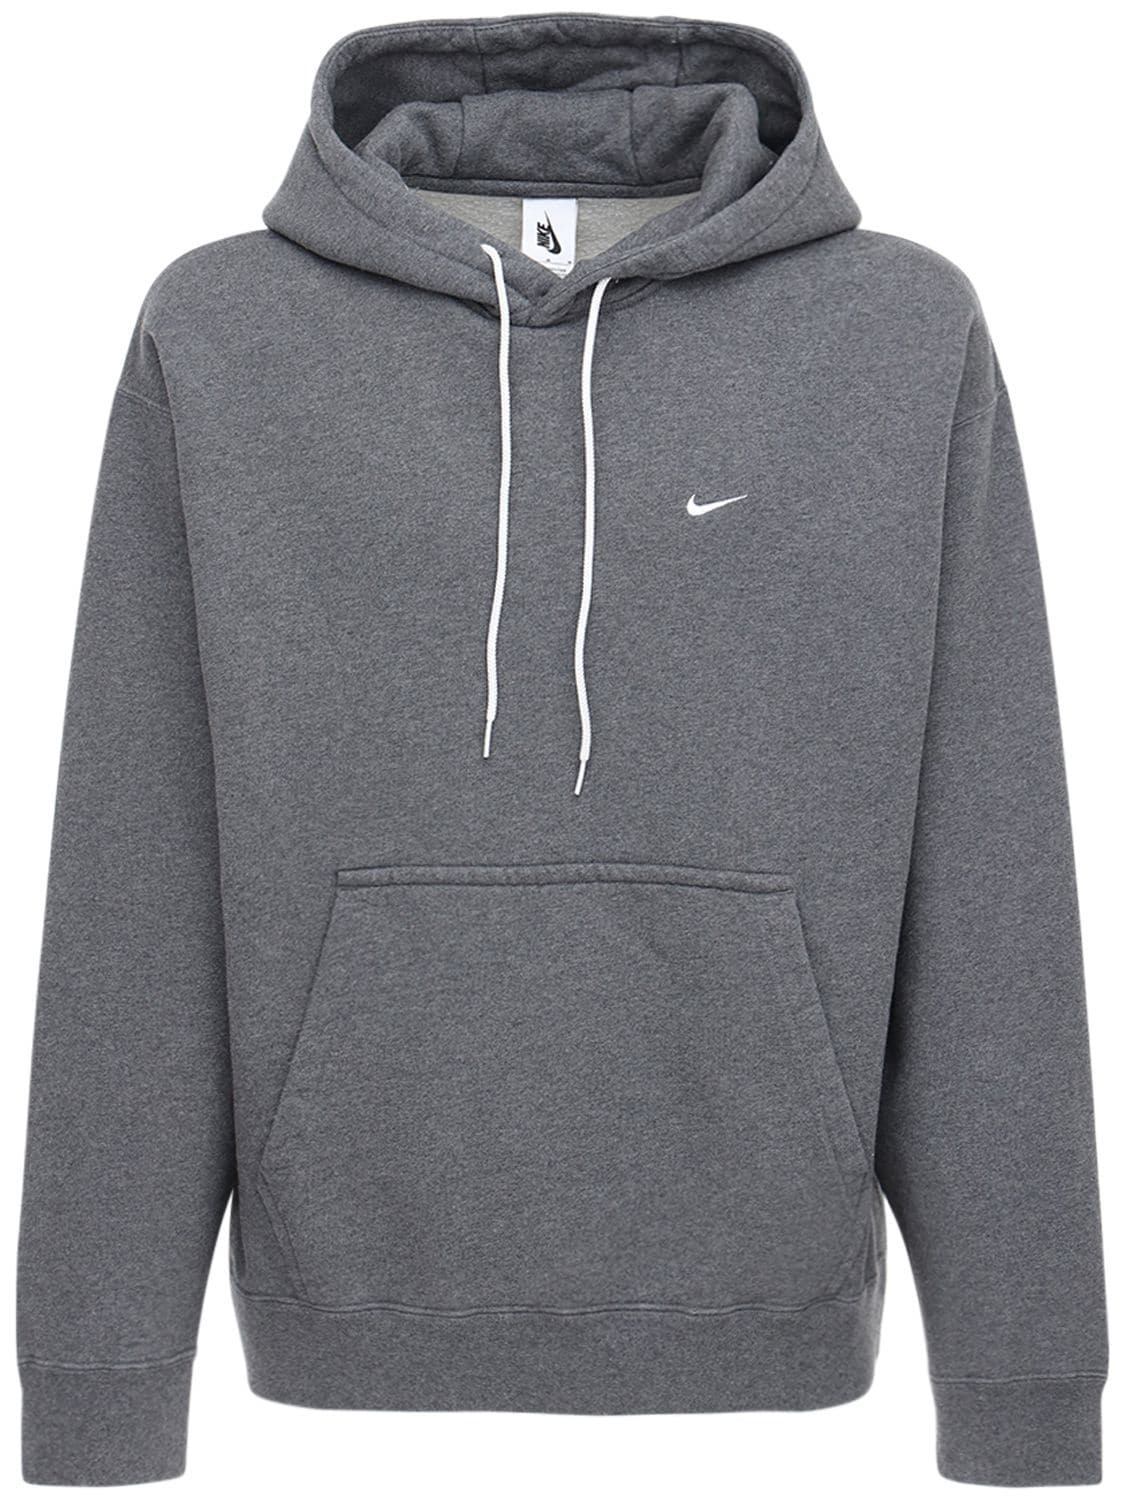 Nike Nrg Wash Cotton Sweatshirt Hoodie In Charcoal